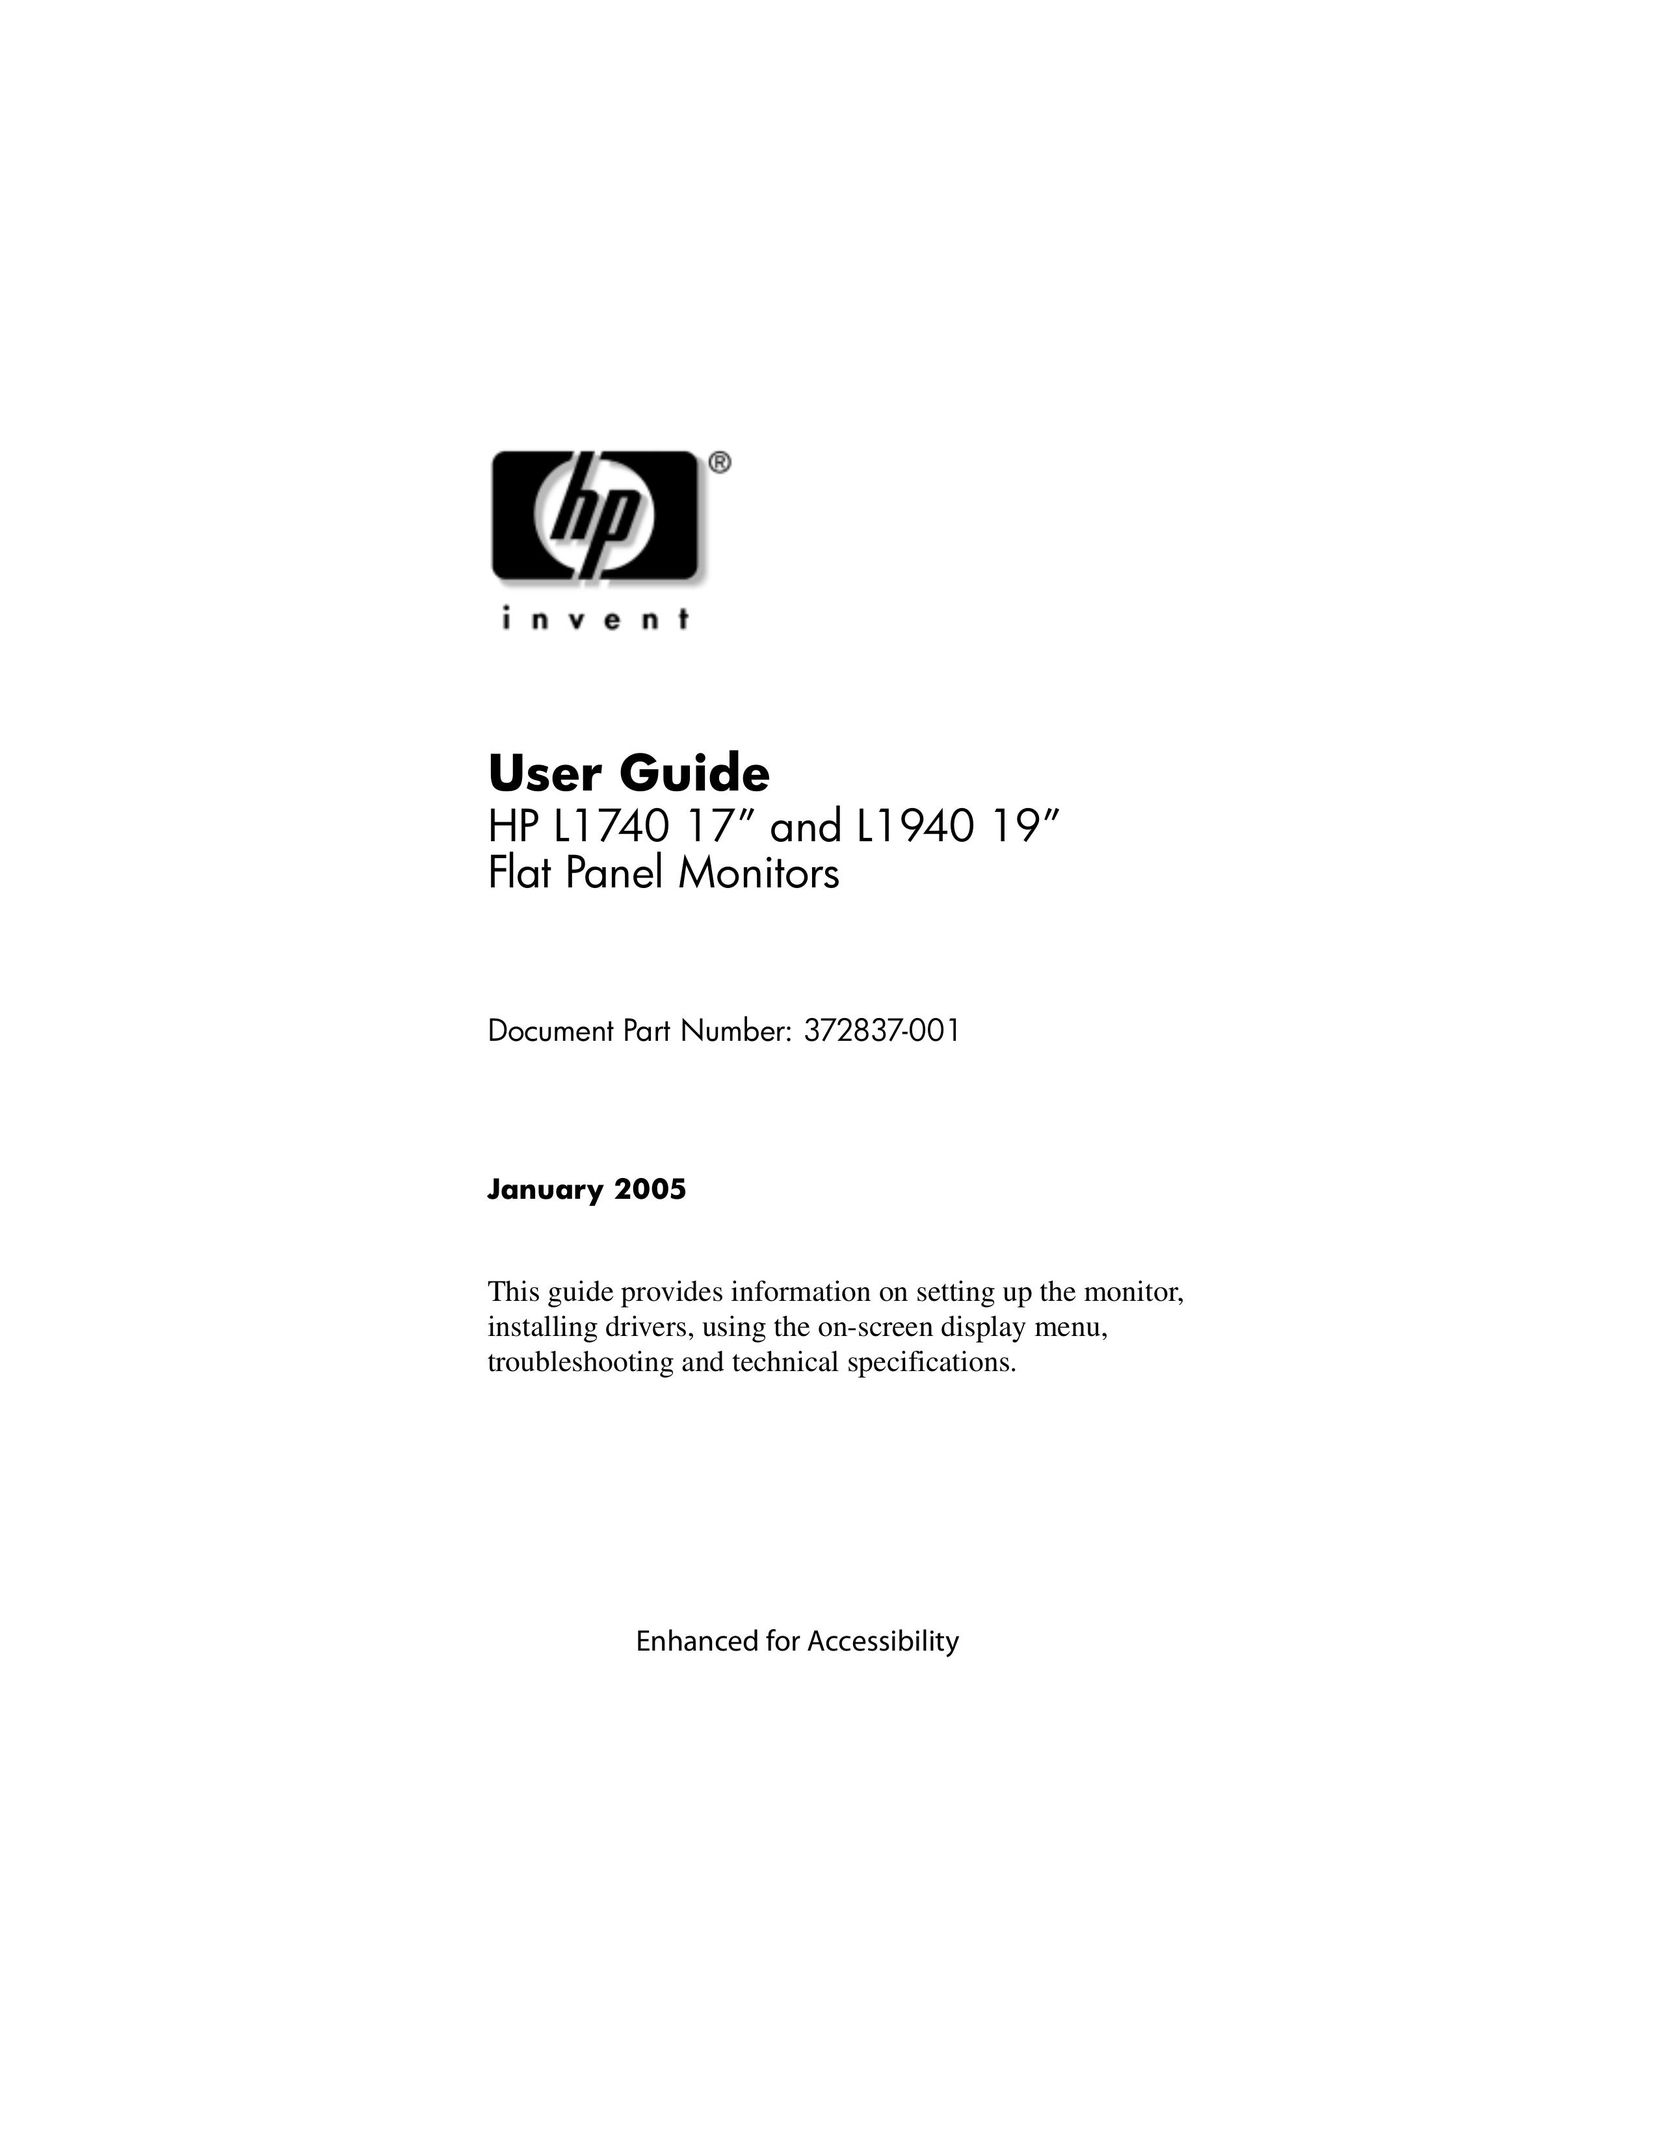 HP (Hewlett-Packard) L1740 17 Car Video System User Manual